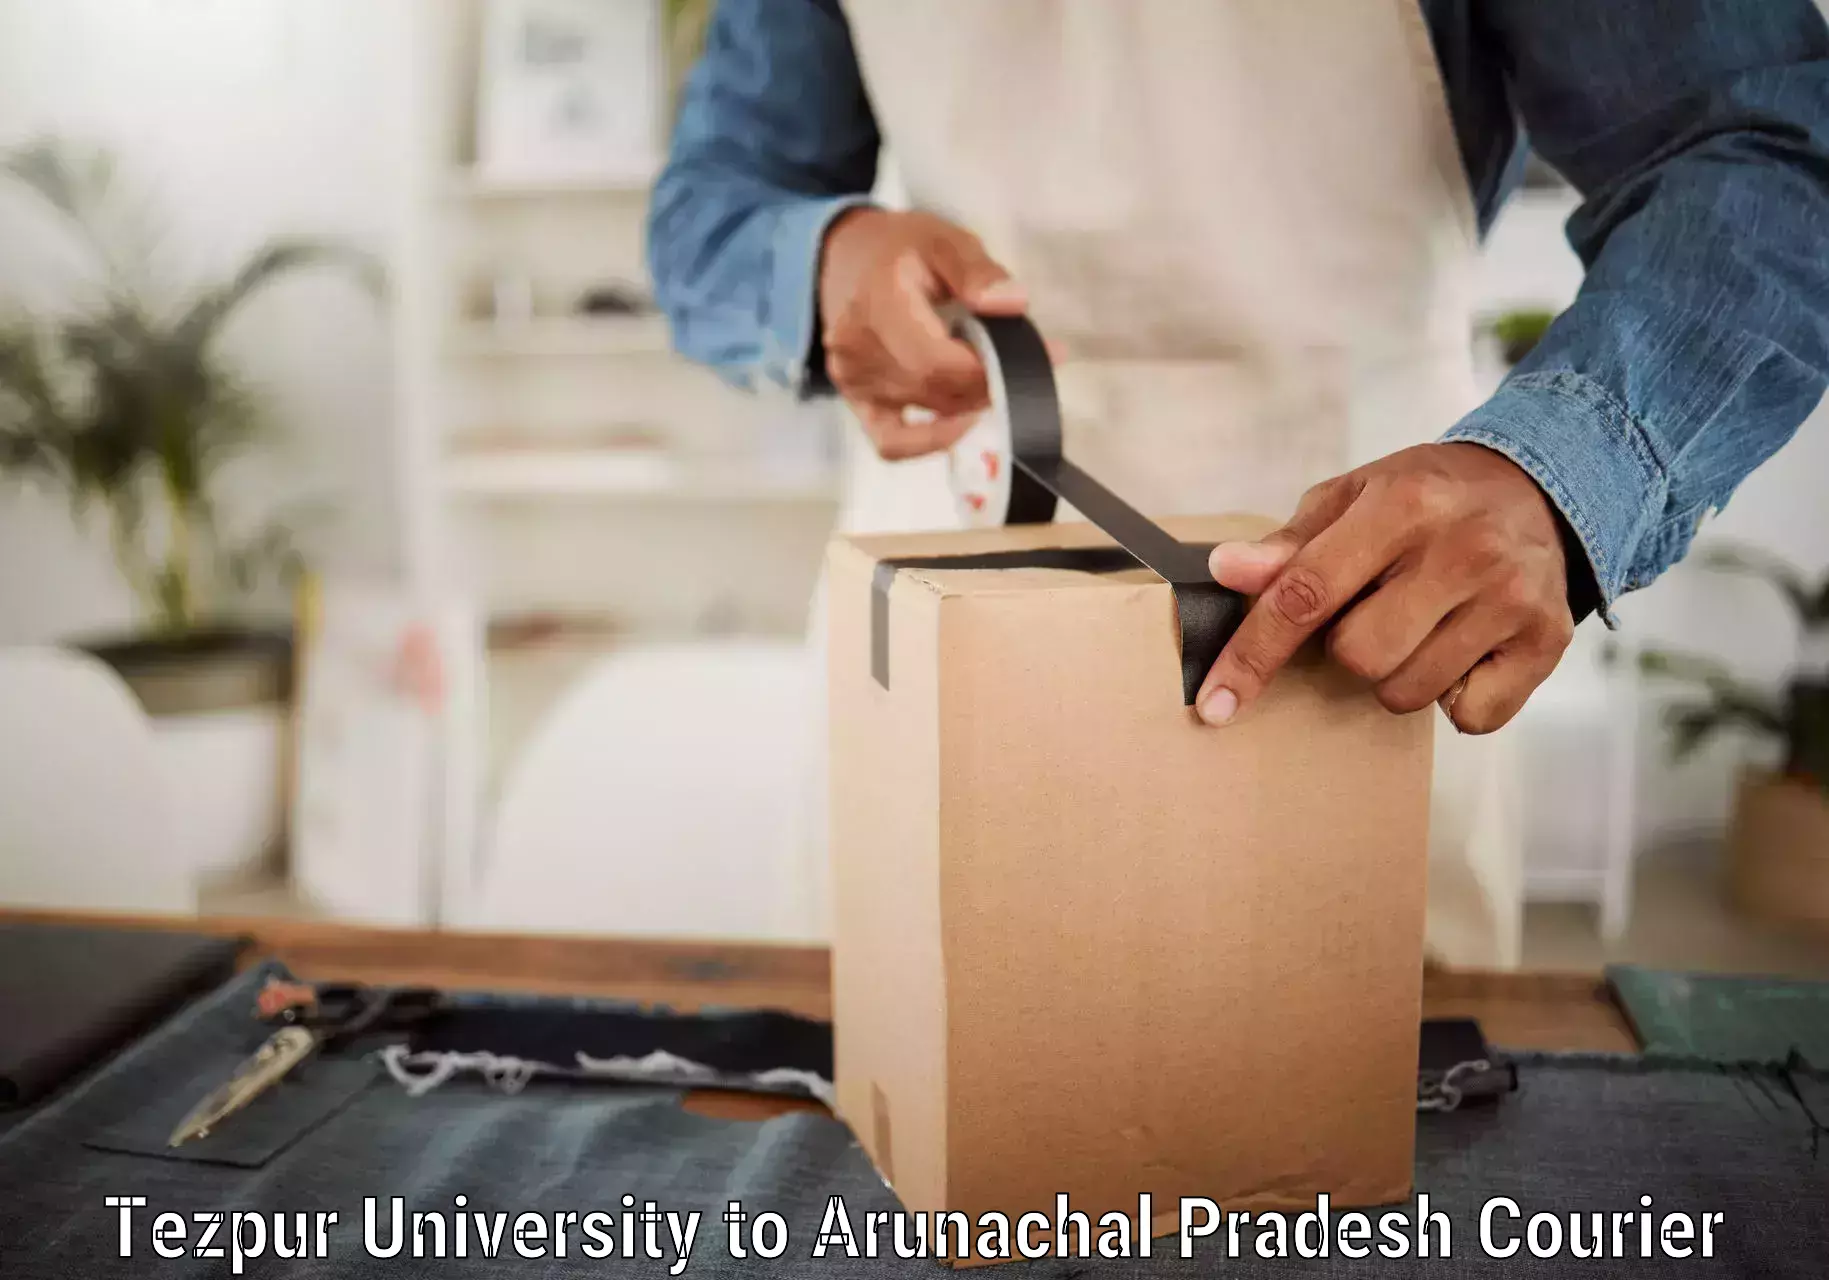 Express delivery capabilities Tezpur University to Arunachal Pradesh